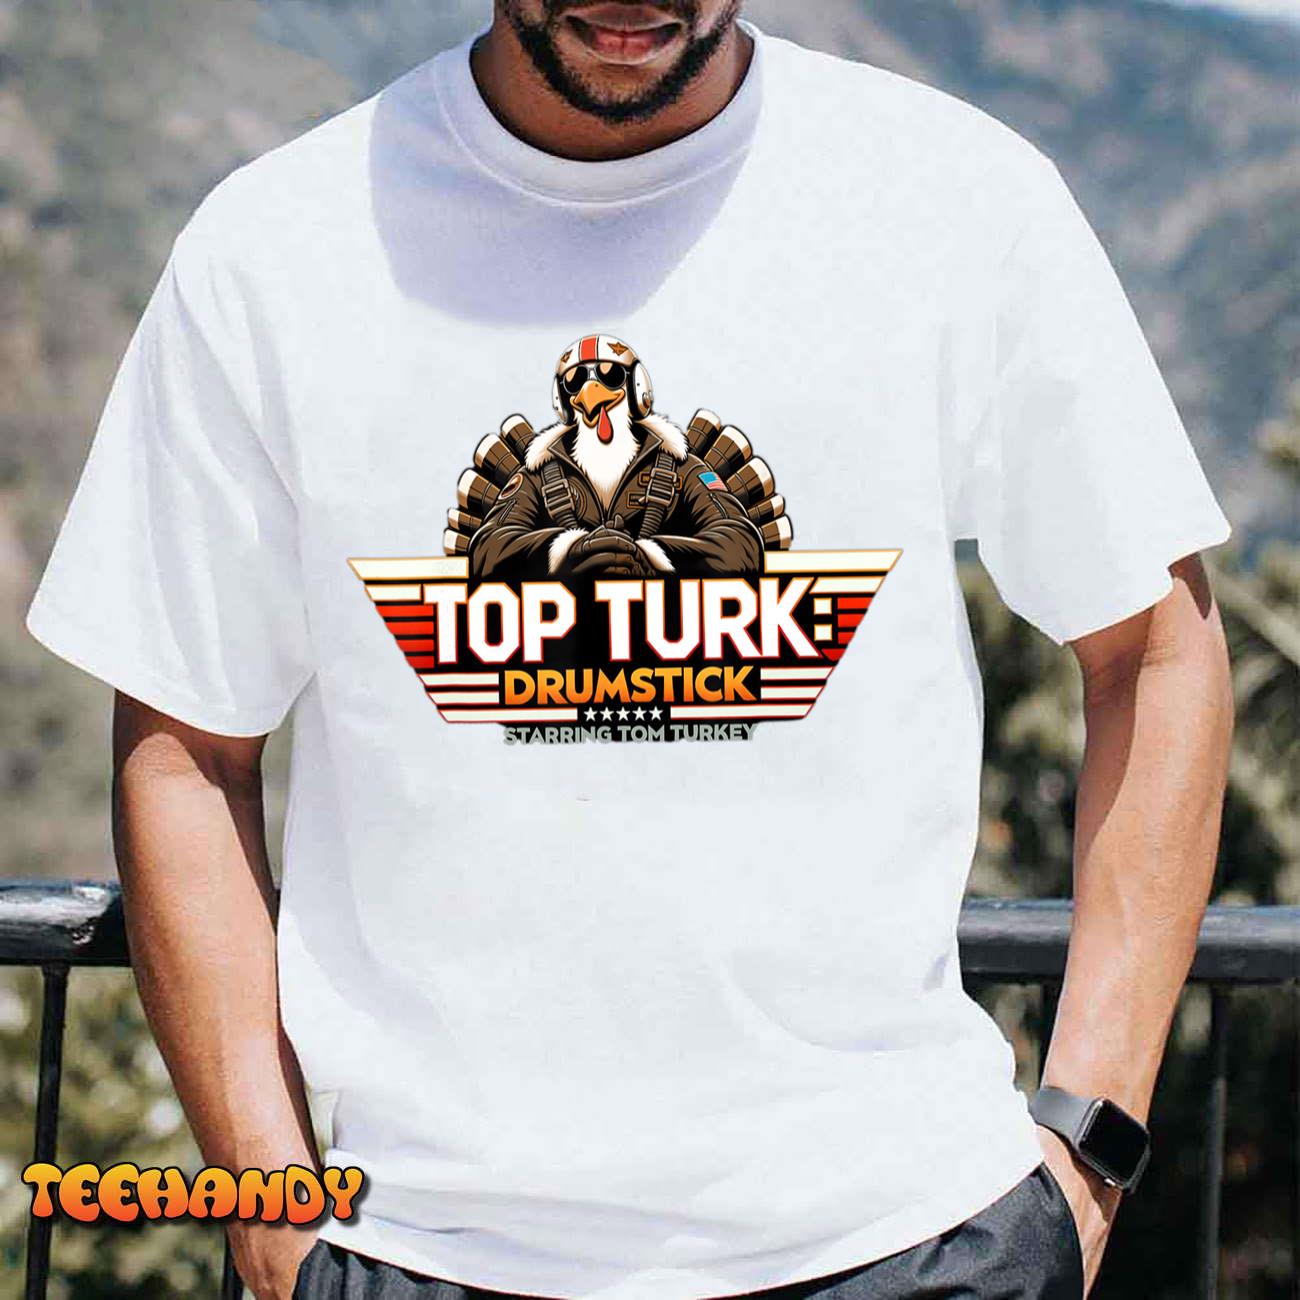 Top Turk Funny Thanksgiving Shirt for Men Women T-Shirt